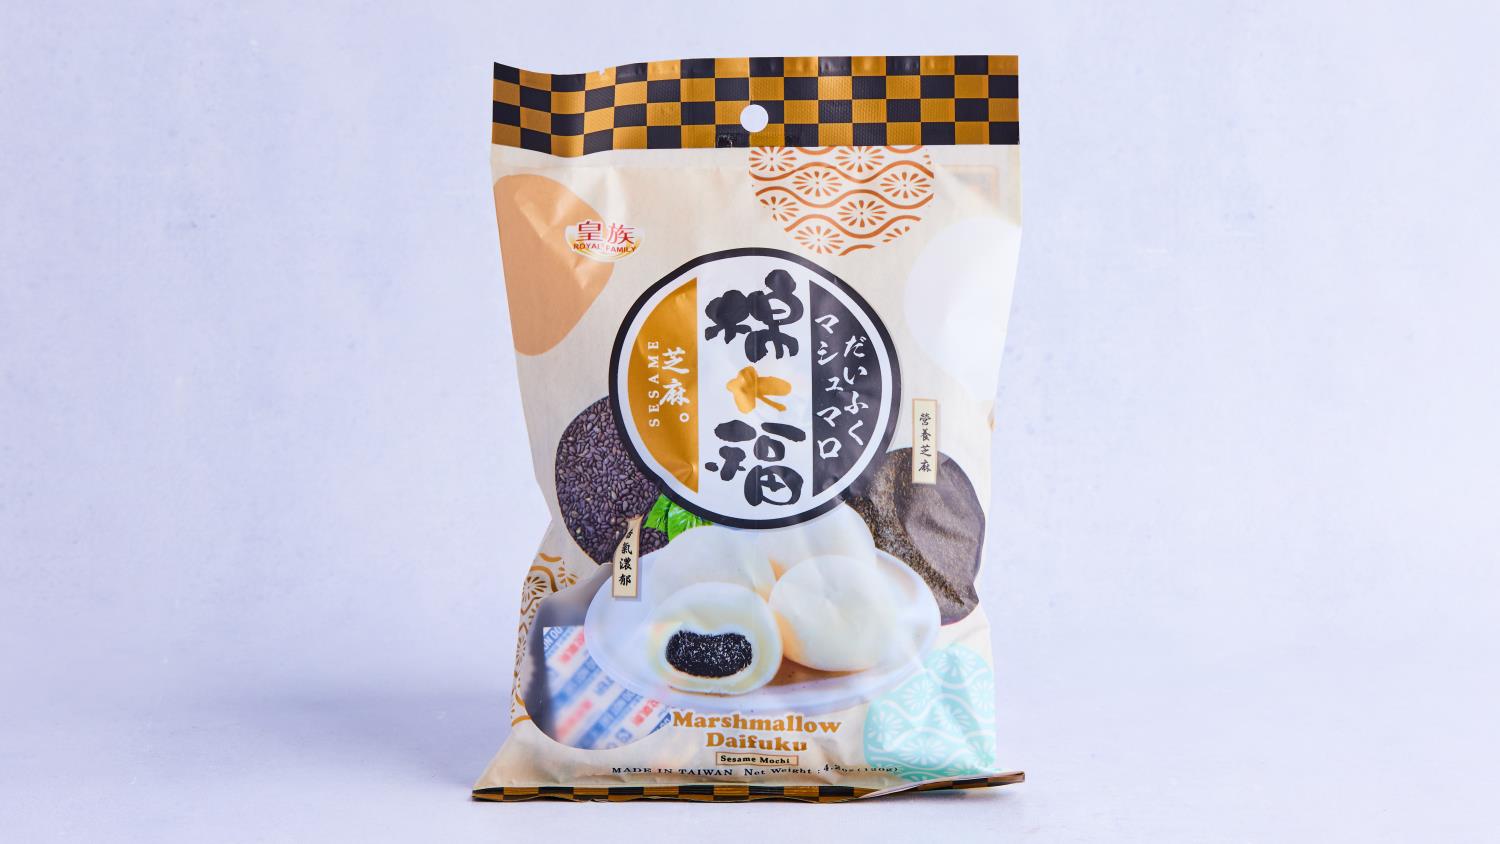 ROYAL FAMILY Marshmallow Daifuku Sesame Mochi 120g